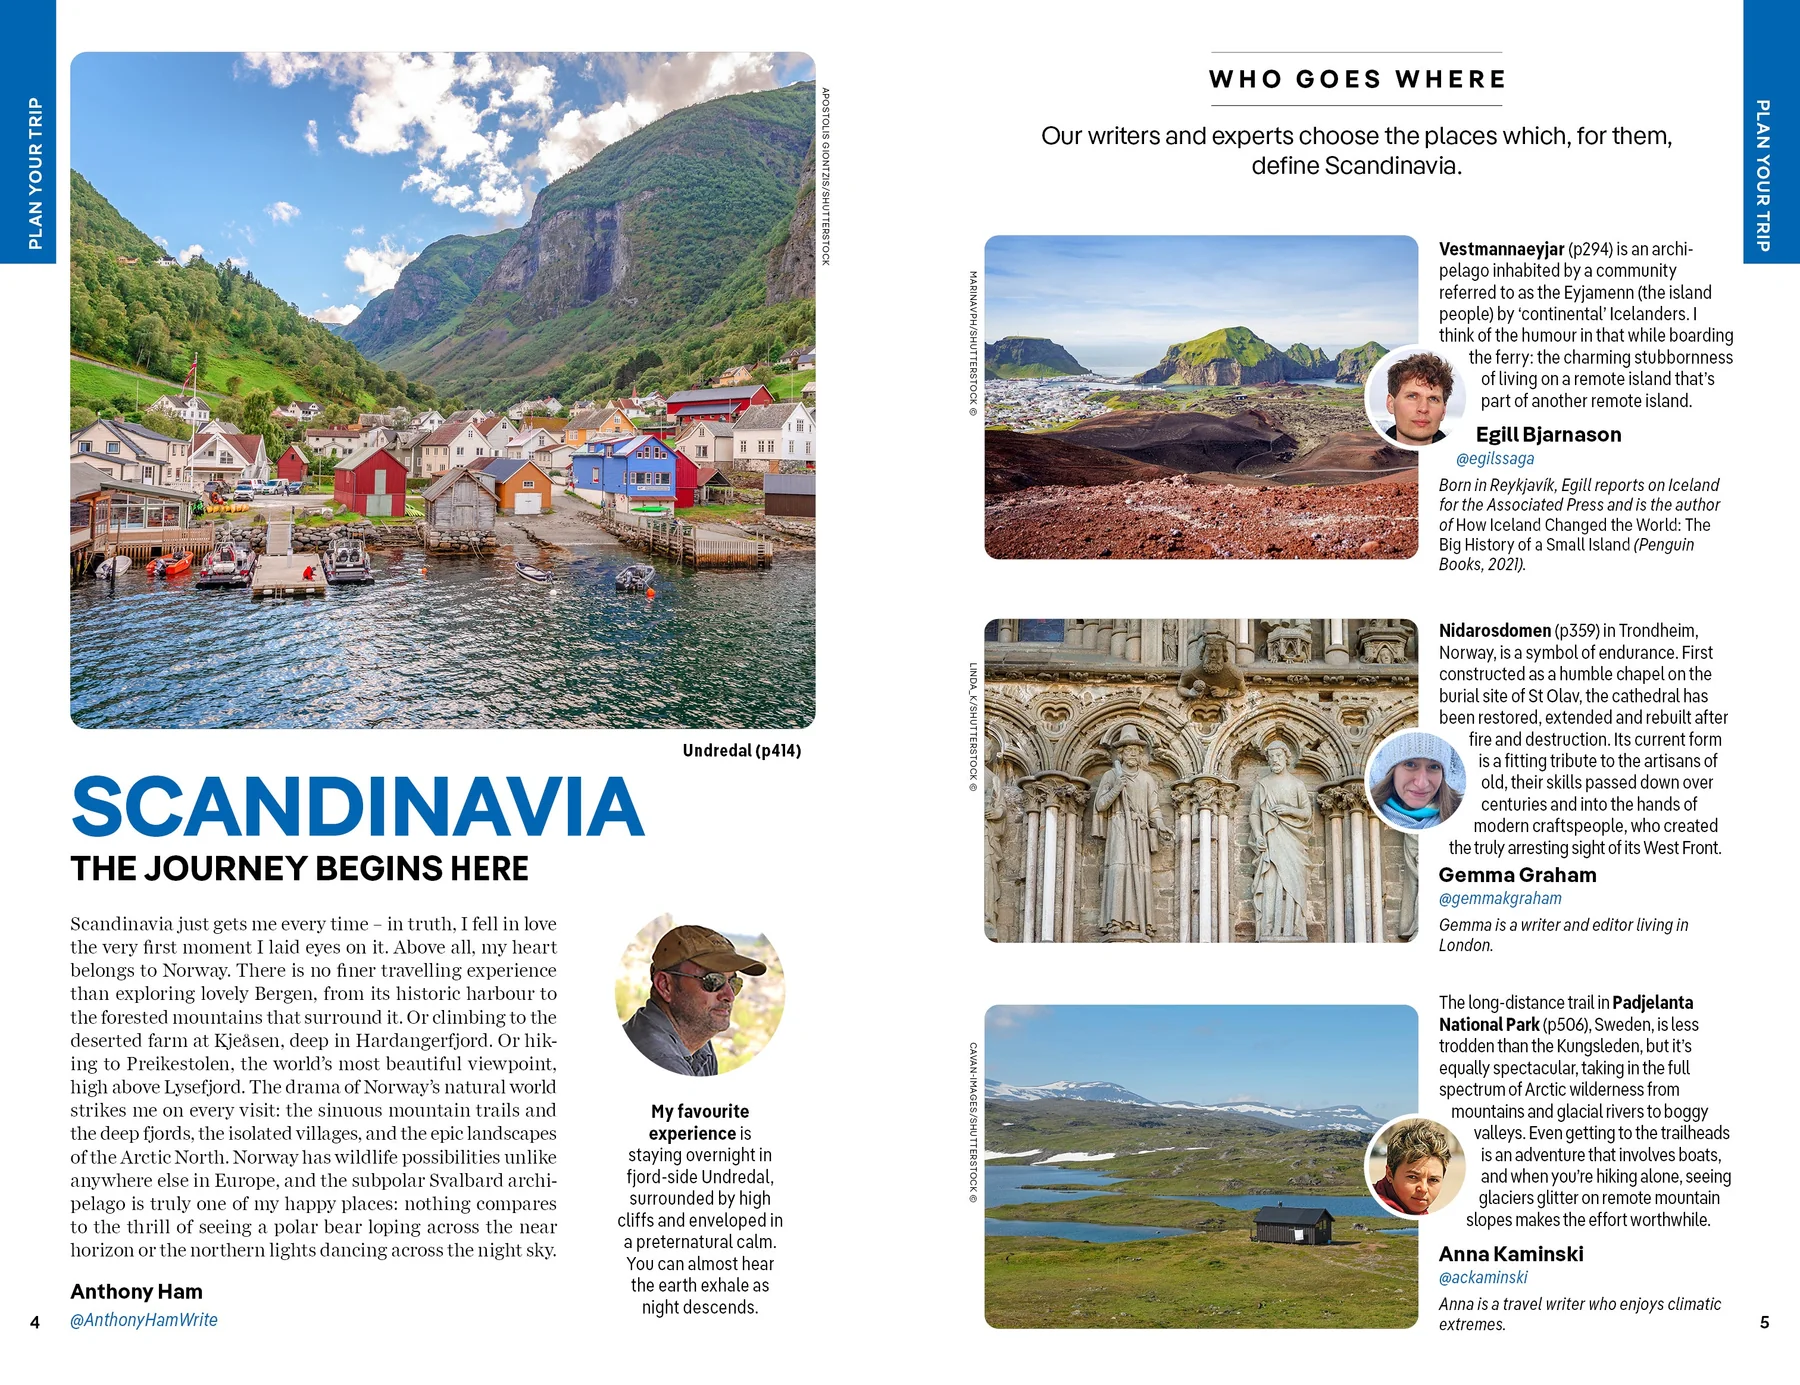 Scandinavia Lonely Planet